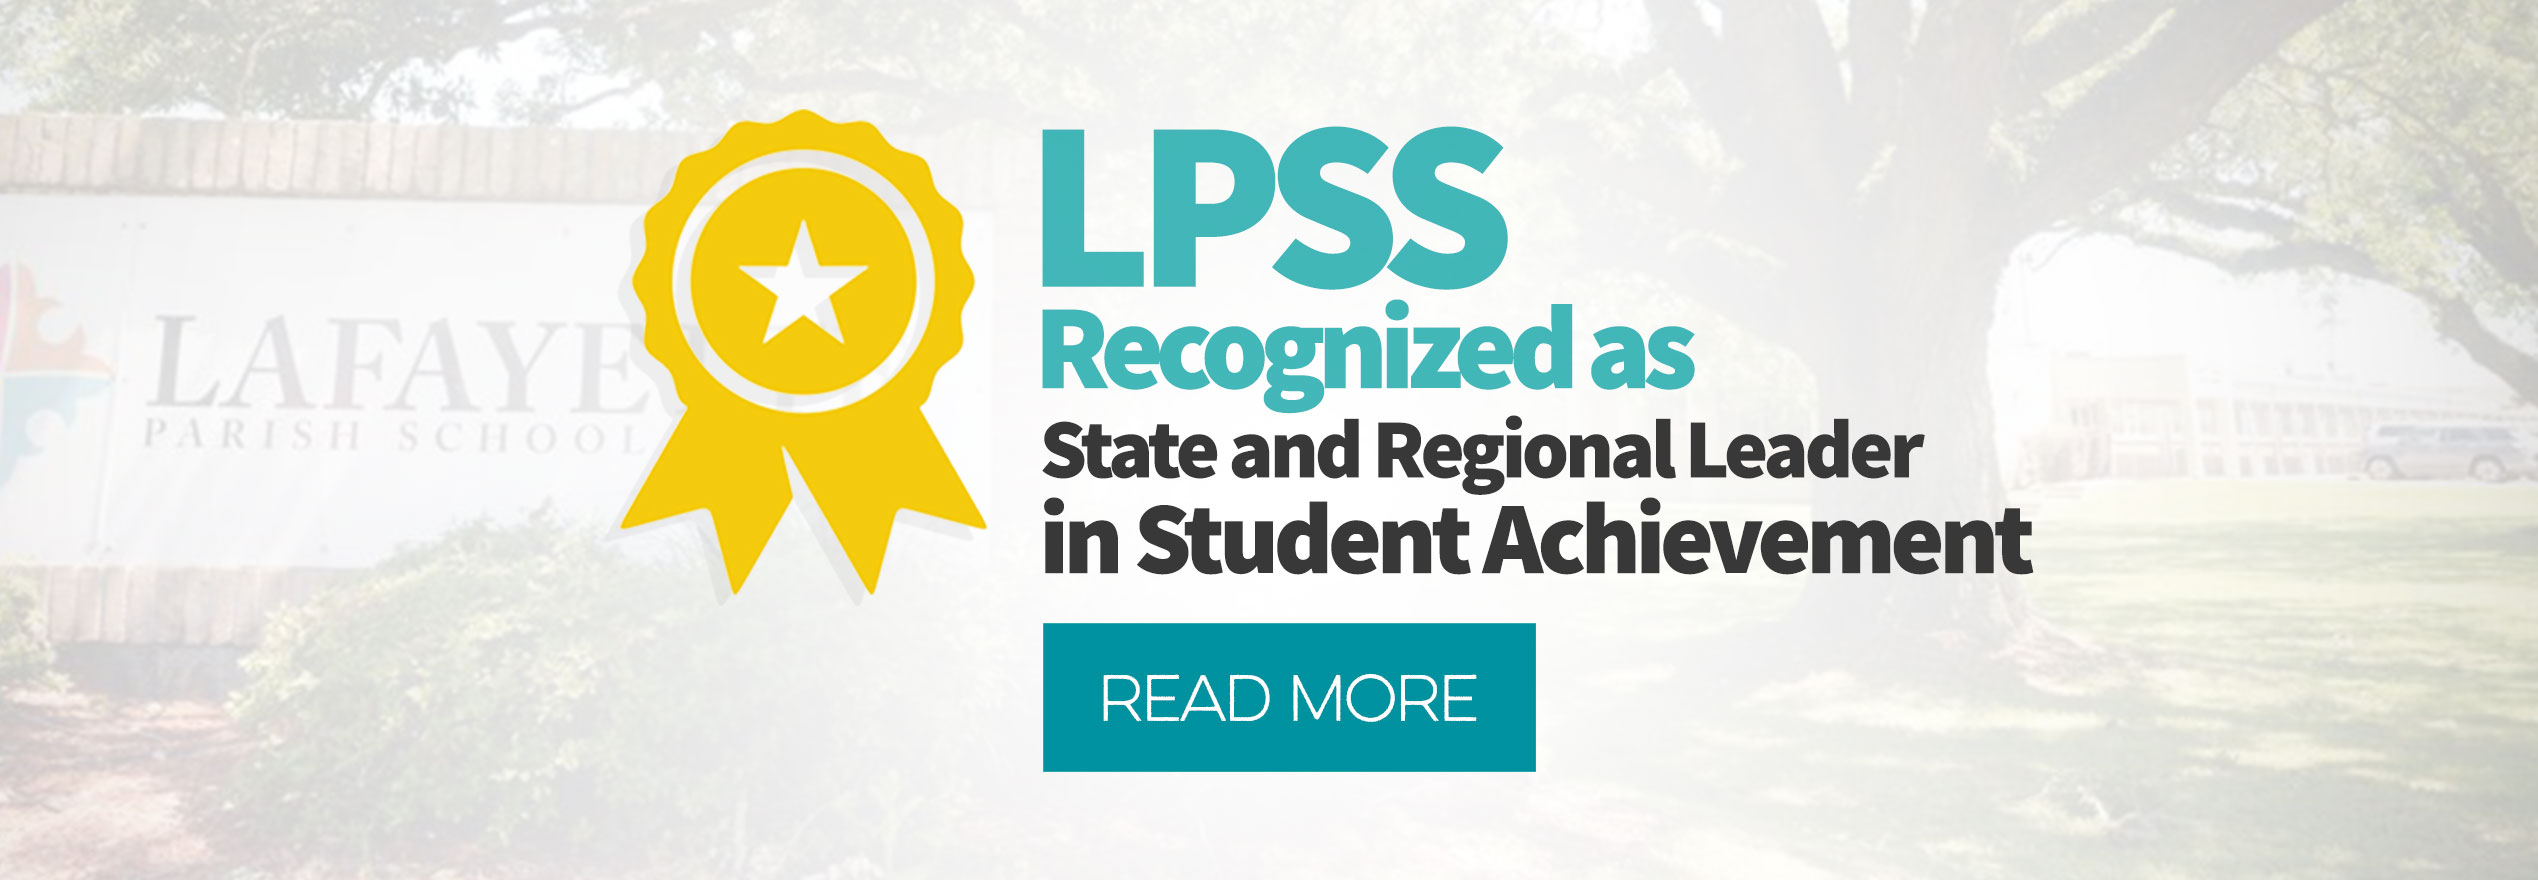 LPSS Recognized